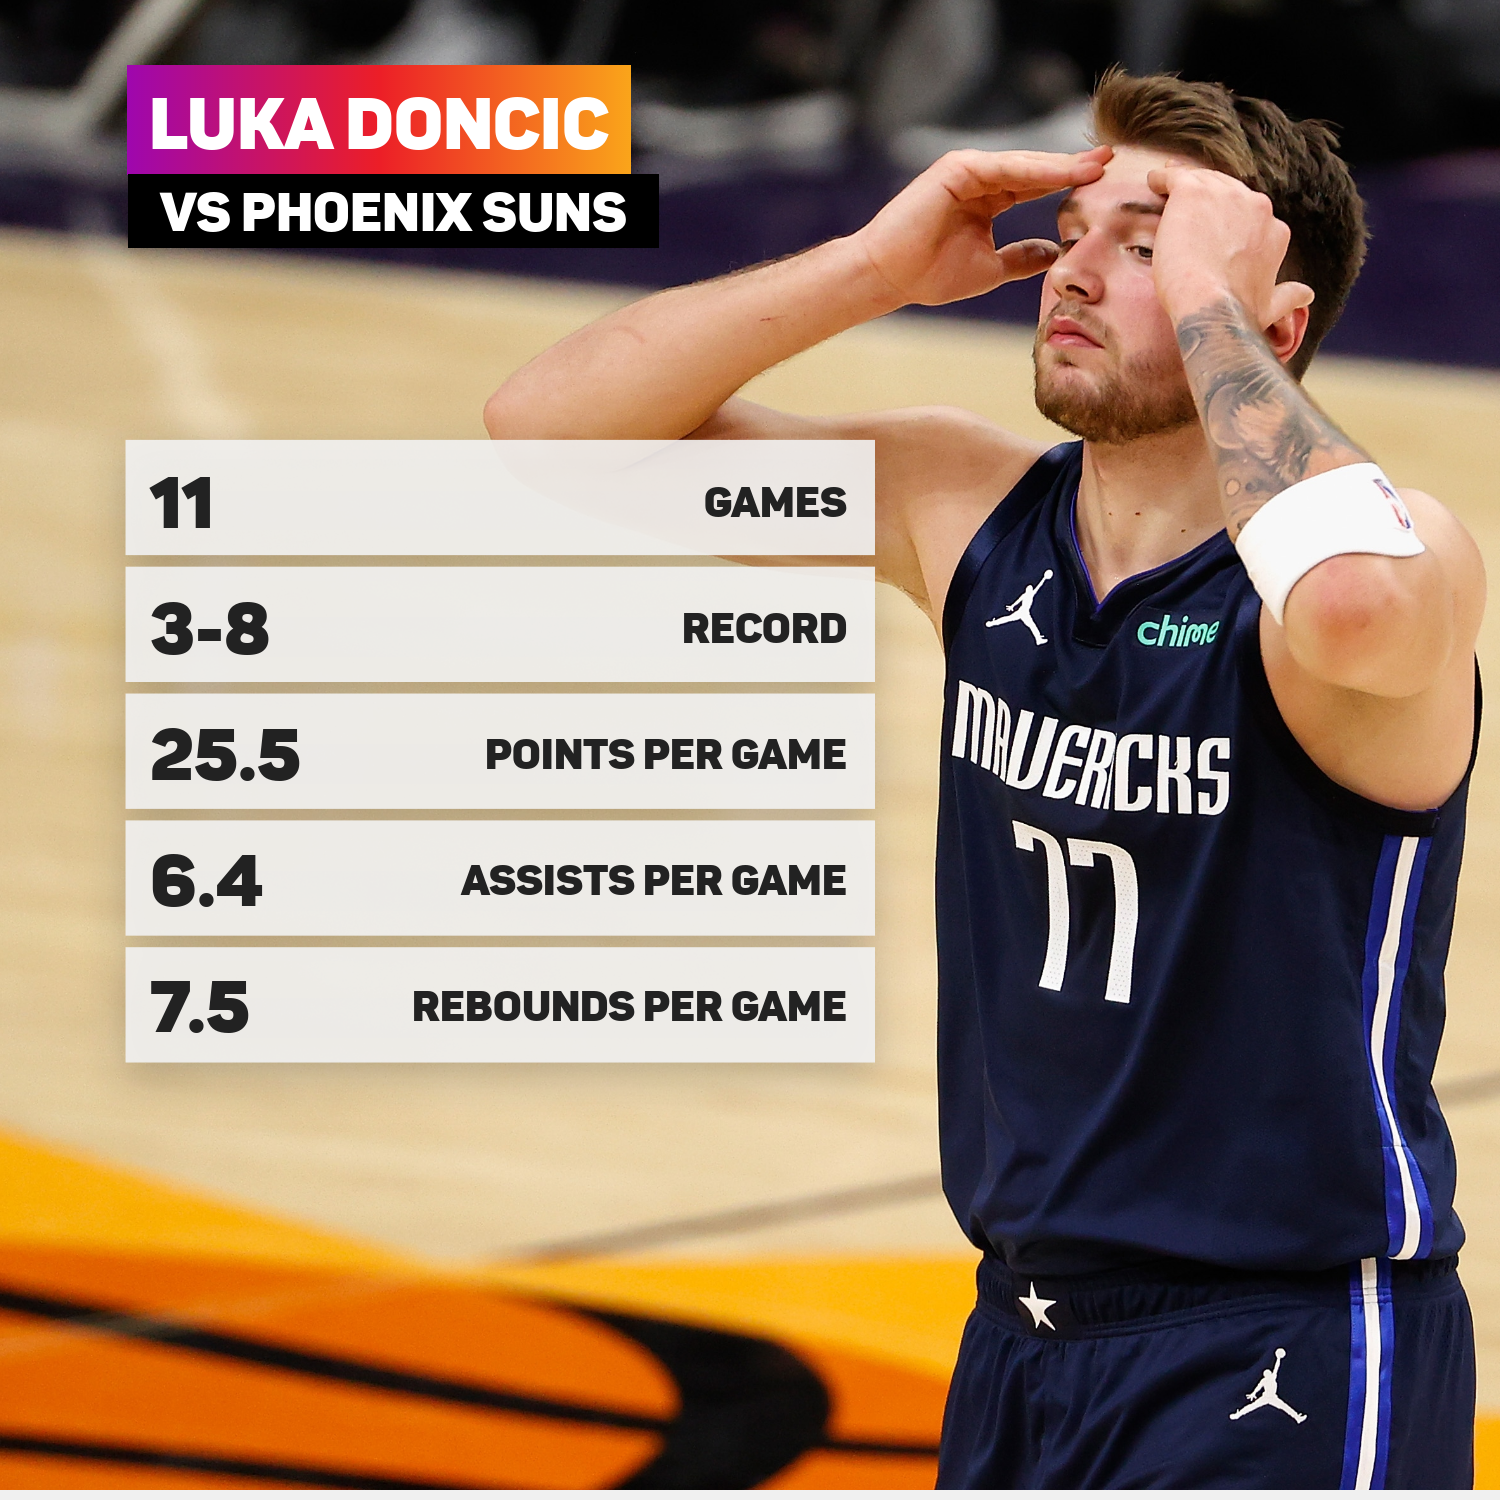 Luka Doncic vs Phoenix Suns